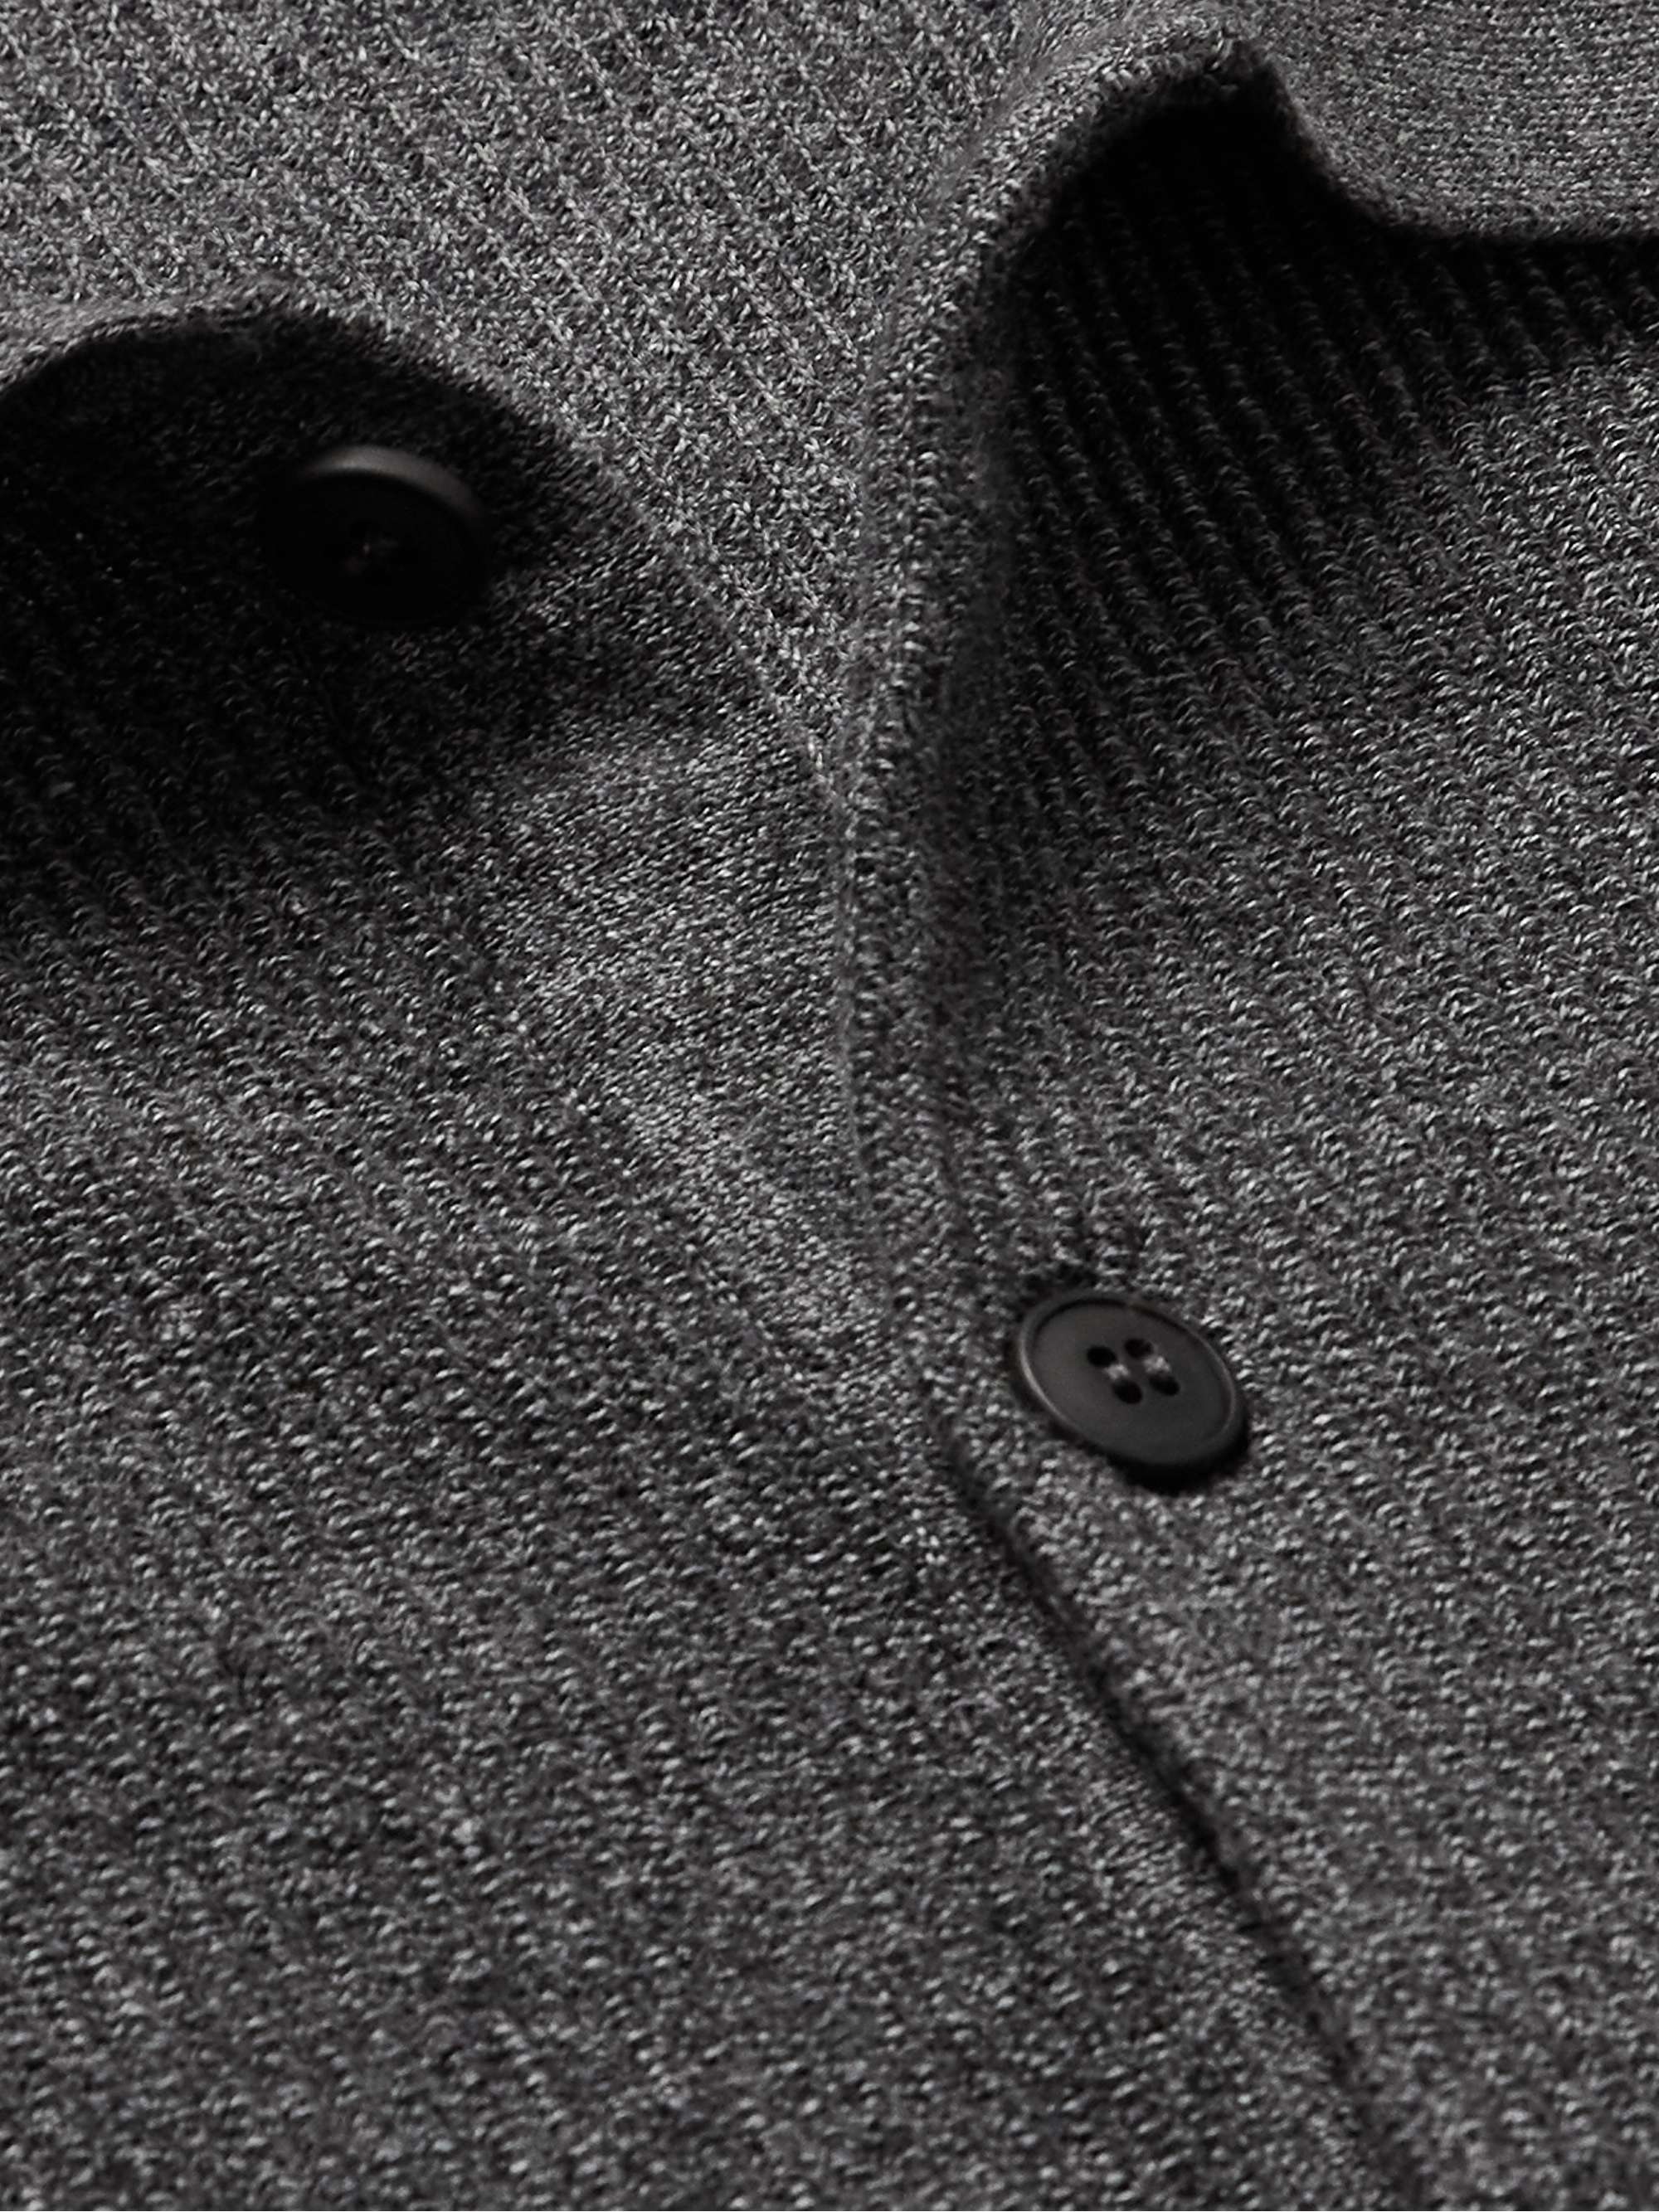 SUNSPEL Convertible-Collar Ribbed Cotton Cardigan